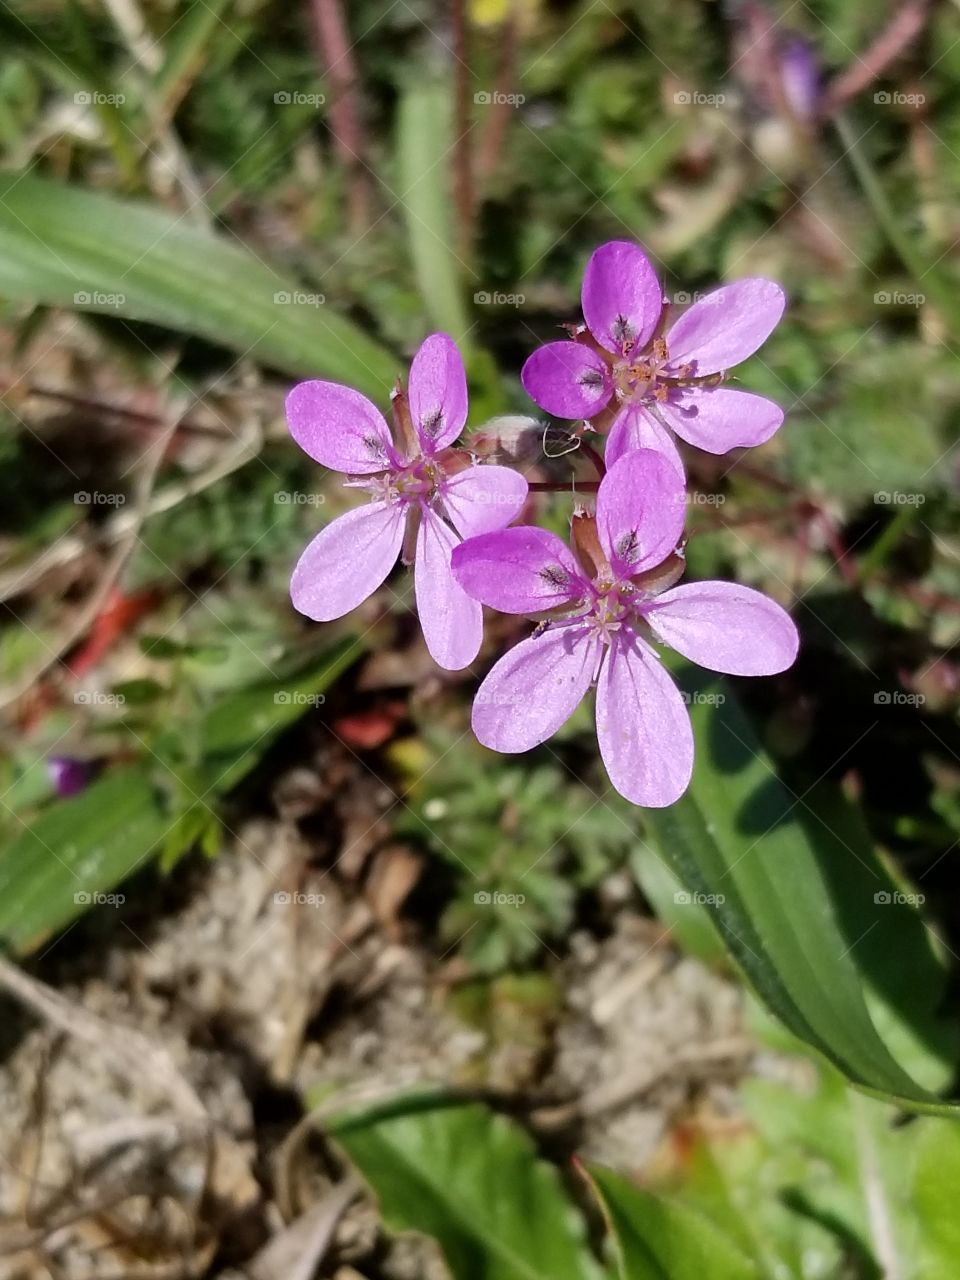 Tiny pink flowering plant